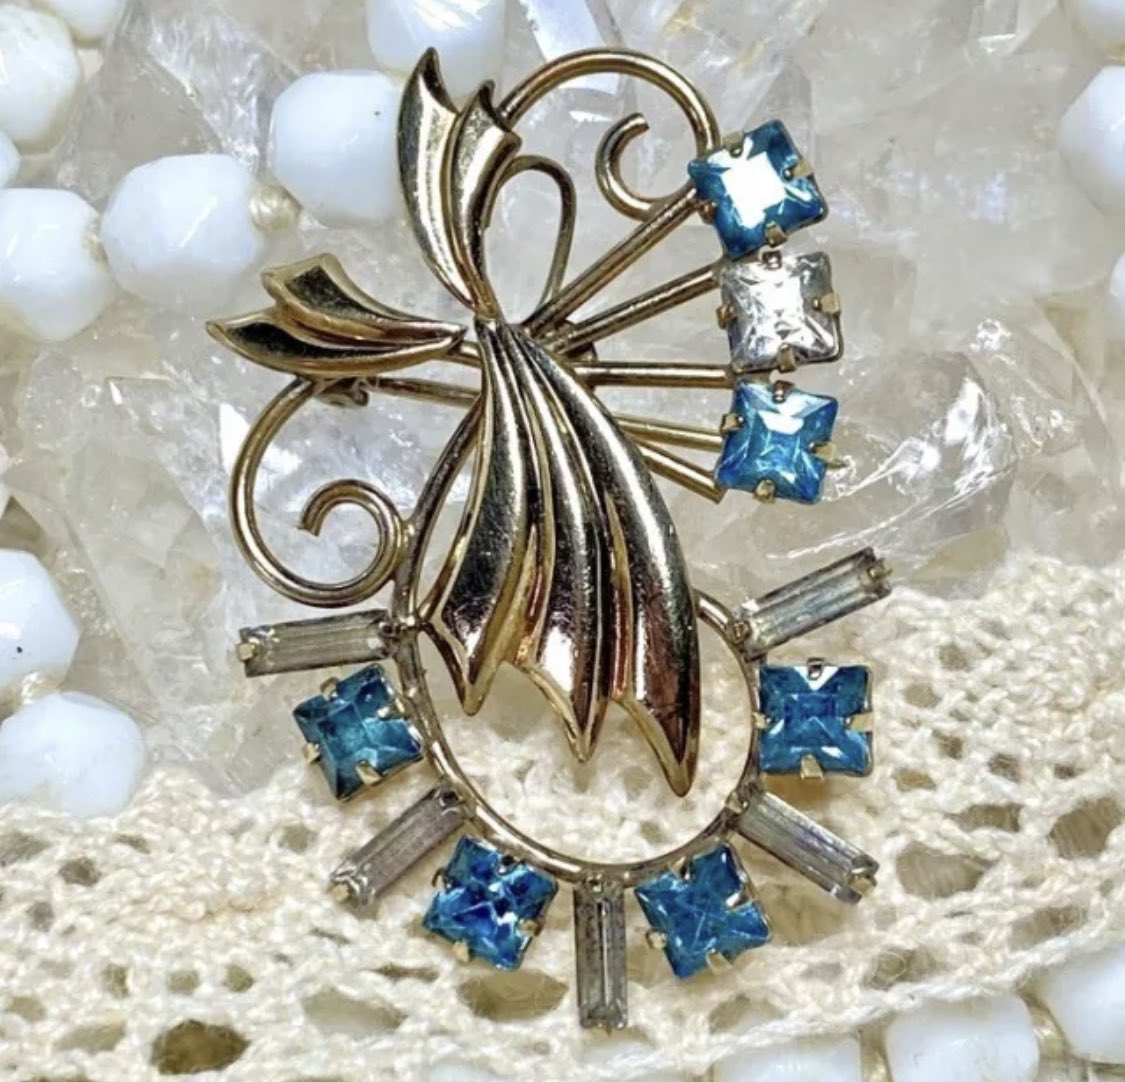 Vintage De Curtis 1950’s Rhinestone Pendant/Brooch - 1/20 12k GF - Hallmarked

ebay.com/itm/1757558490…

#vintagejewelry #brooch #decurtis #gold #rhinestone #crystals